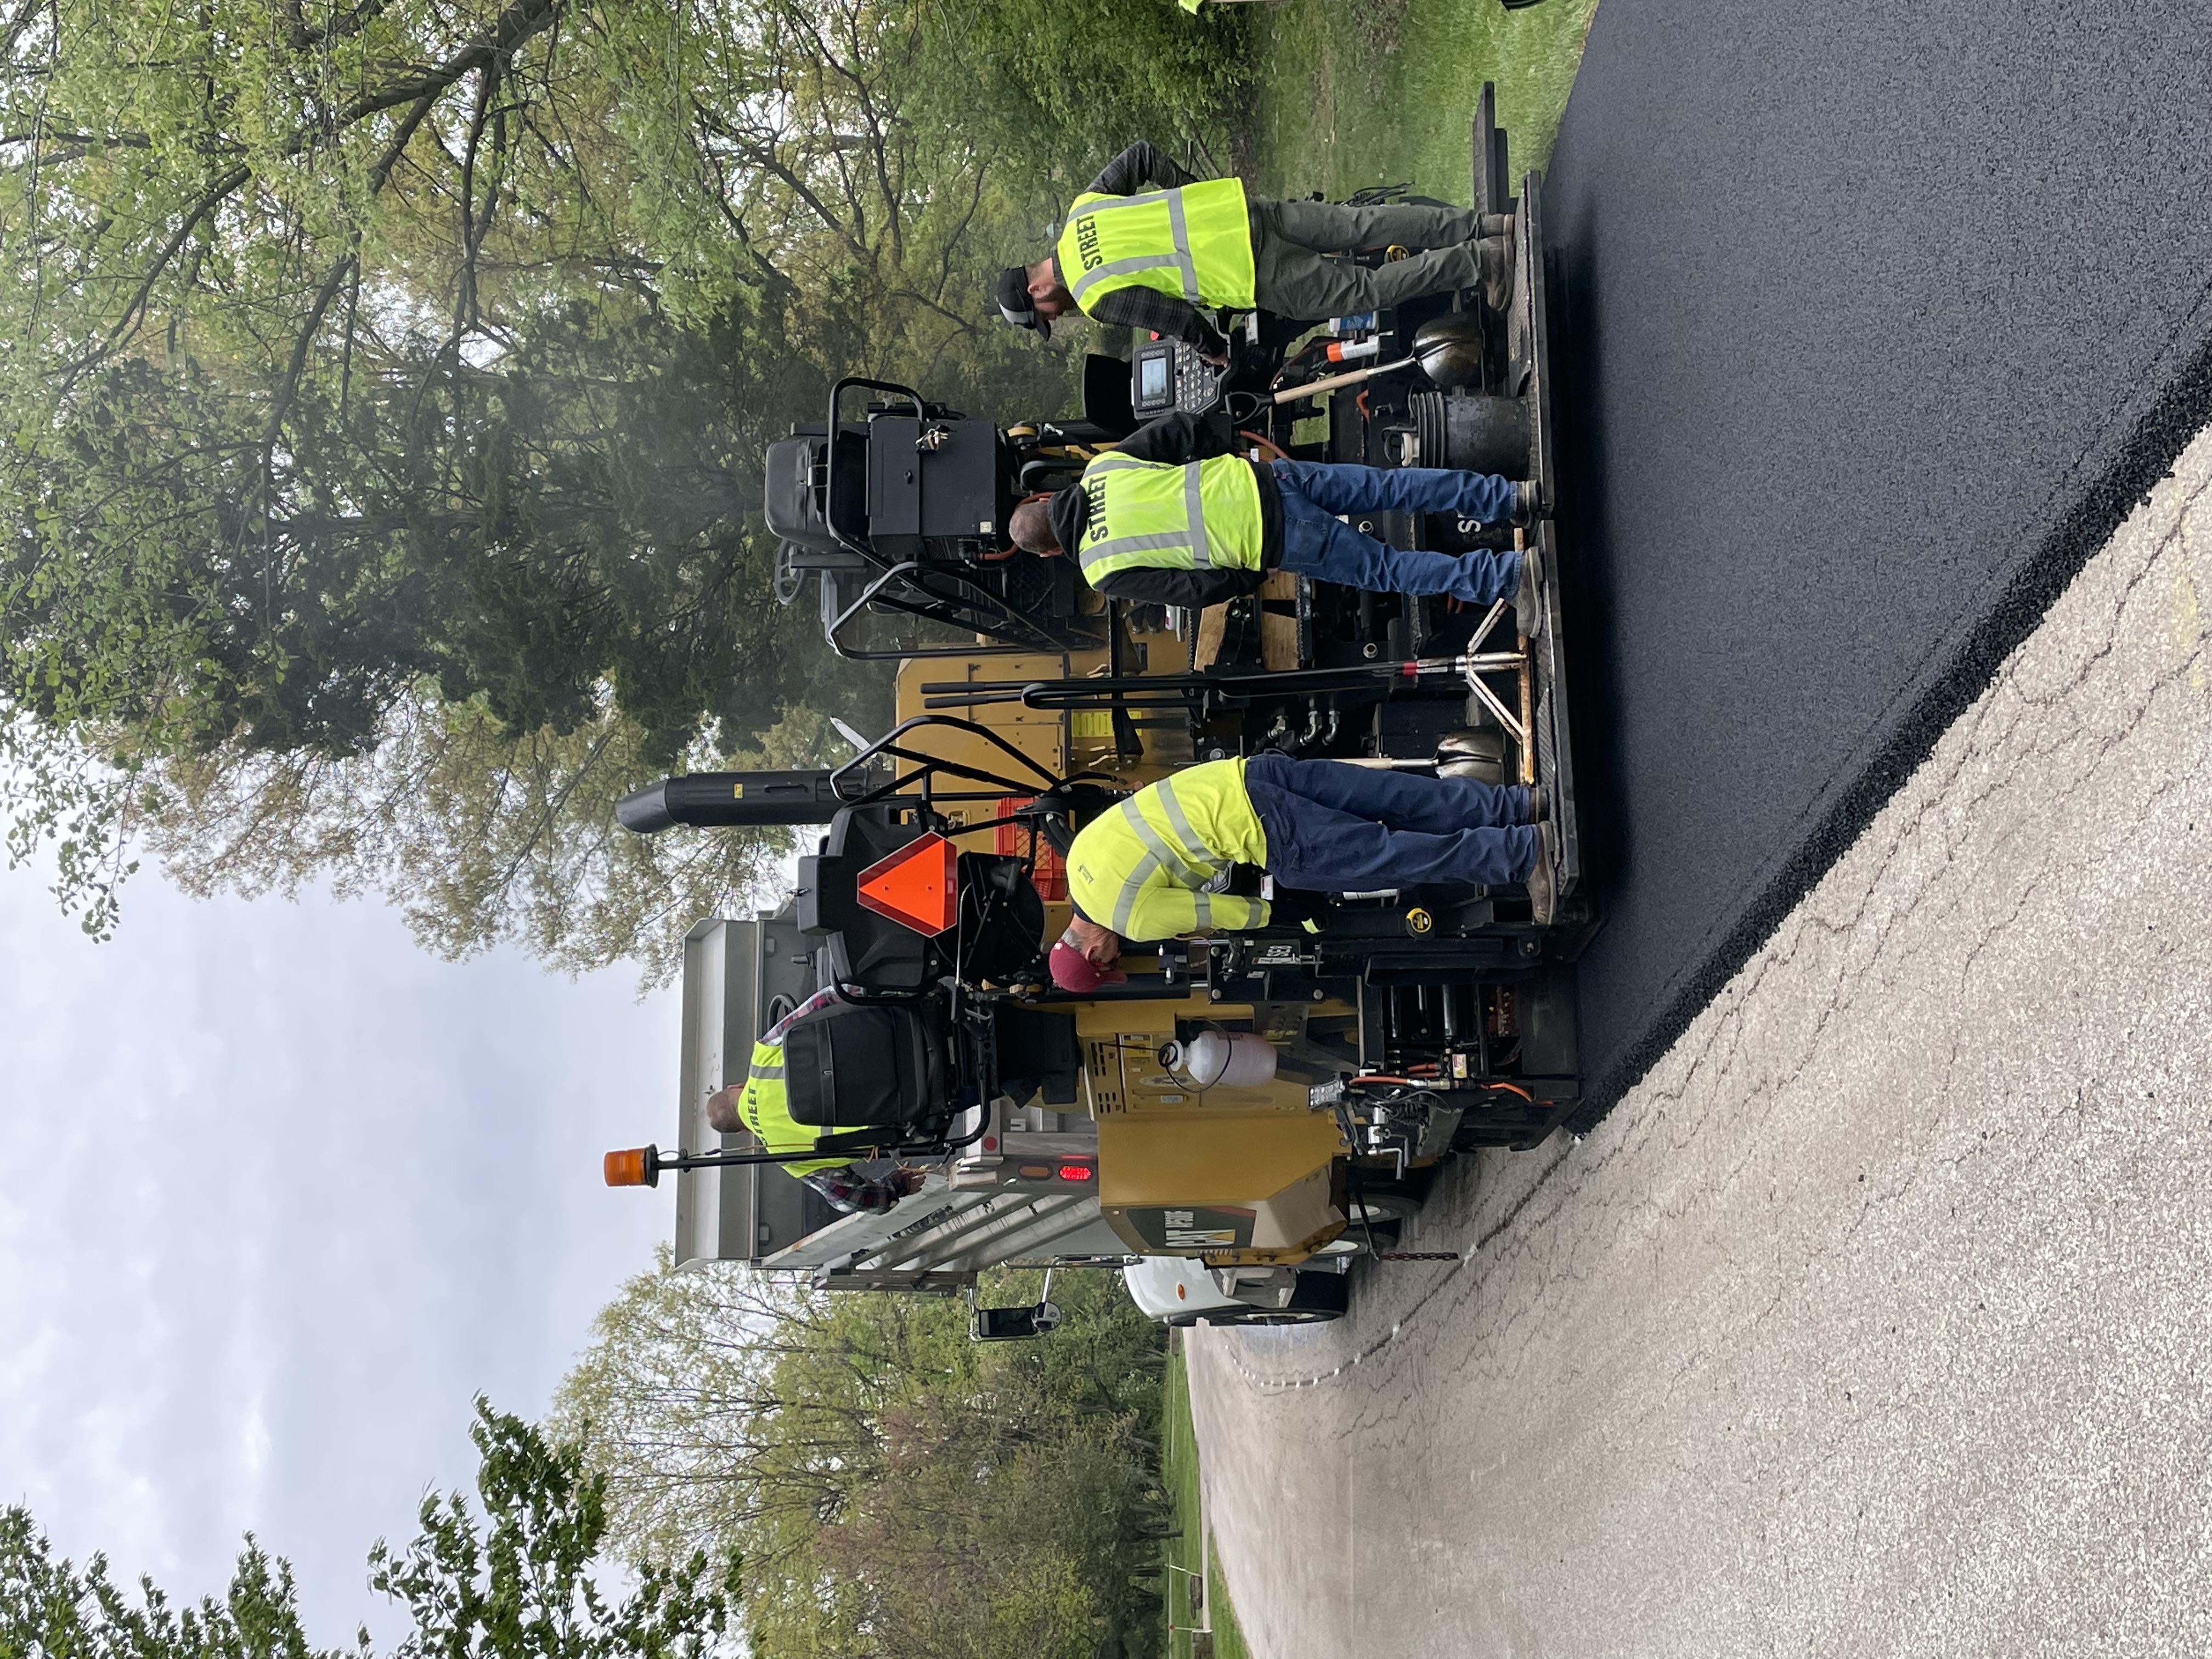 Crews on a Paver Truck installing asphalt